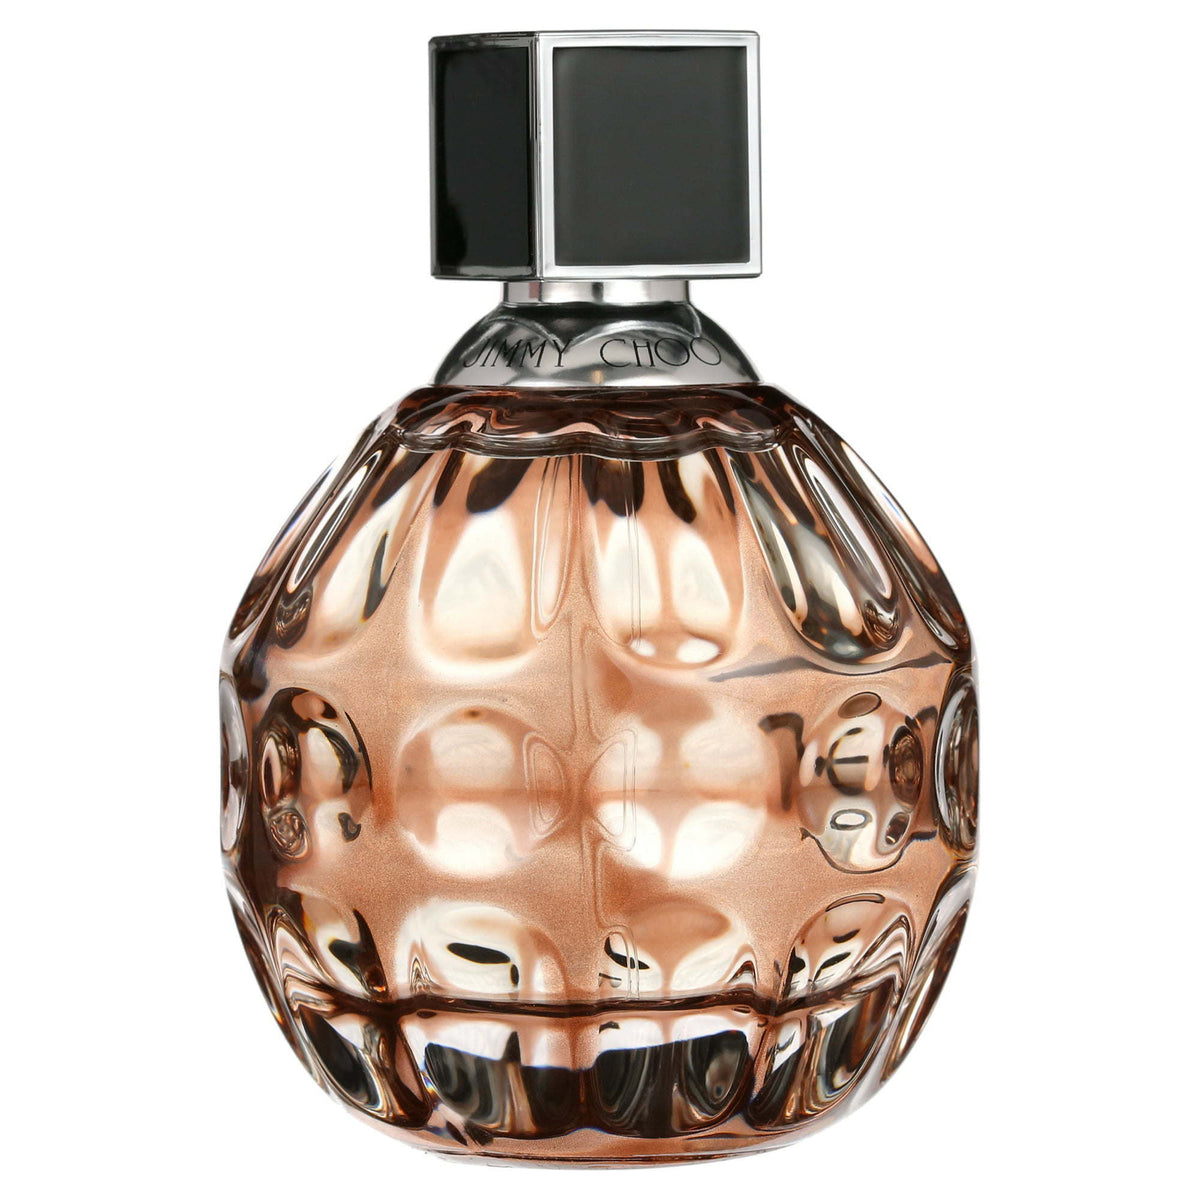 Jimmy Choo Spray, Perfume for Women, 3.3 Oz - Premium Perfume Portfolio from Jimmy Choo - Just $83! Shop now at Ida Louise Boutique